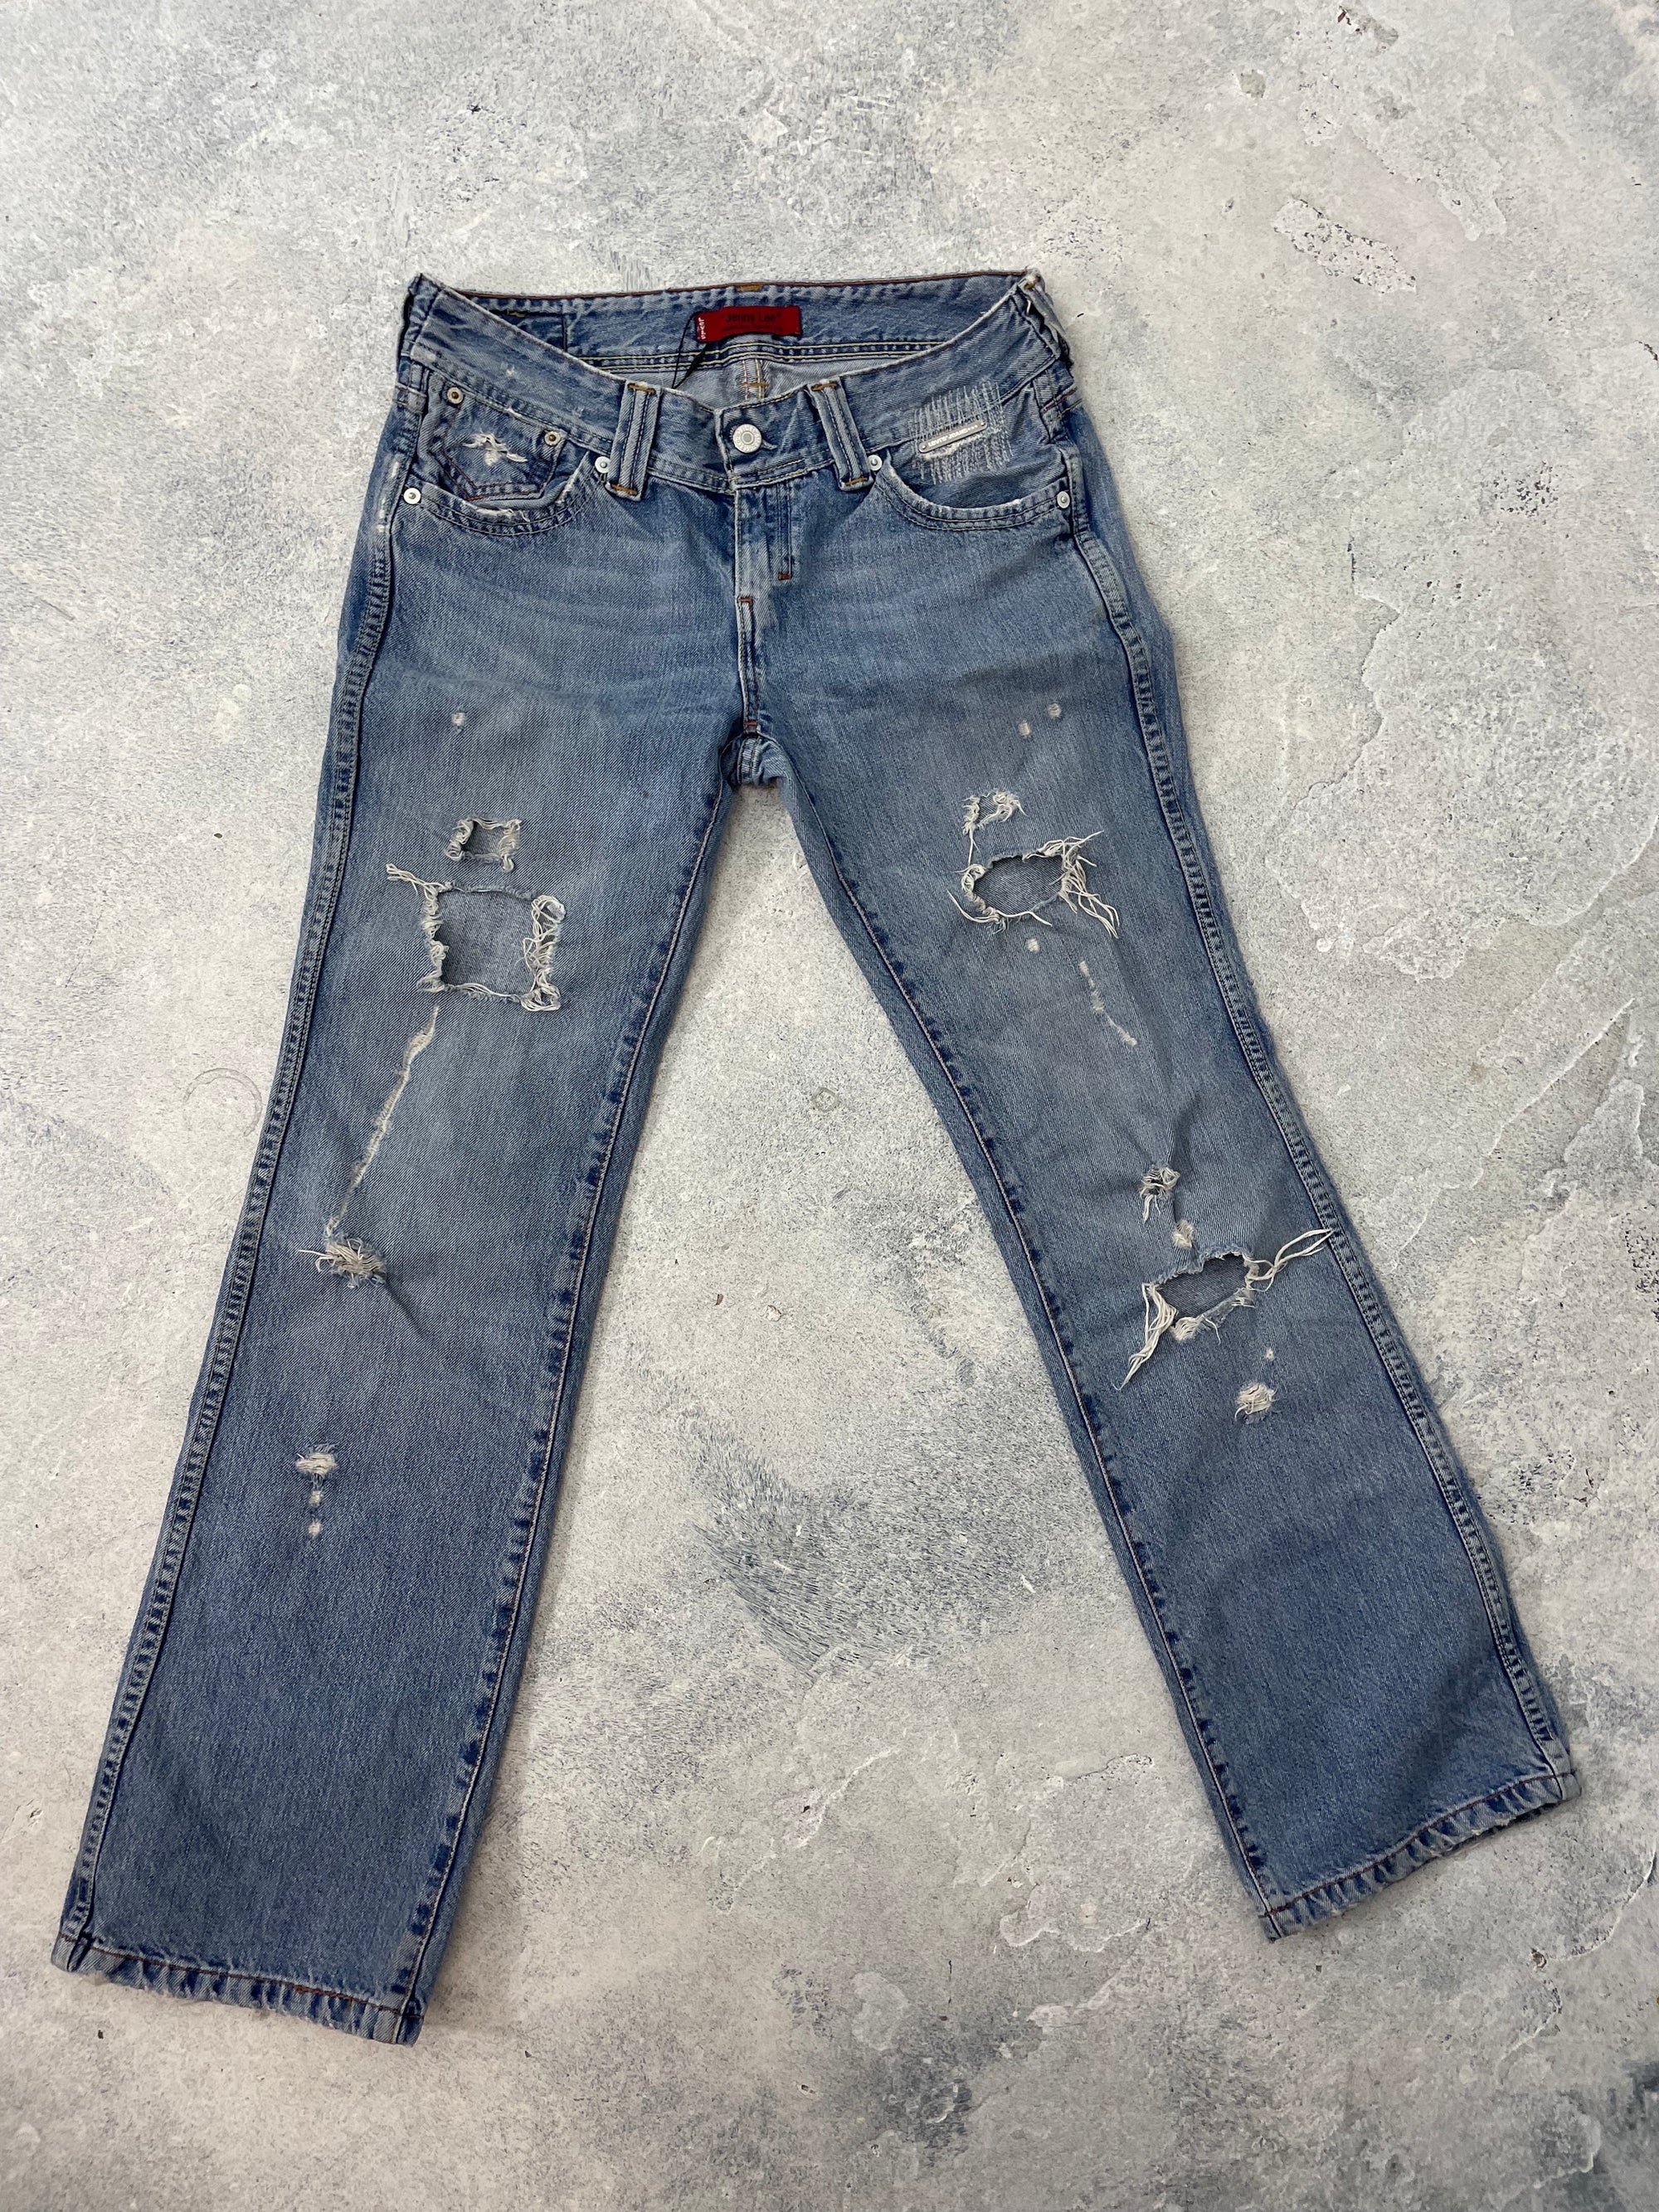 Levi 'Jenny Lee' Low Cut Ripped Jeans, Size S - Don't Shop, Swap!